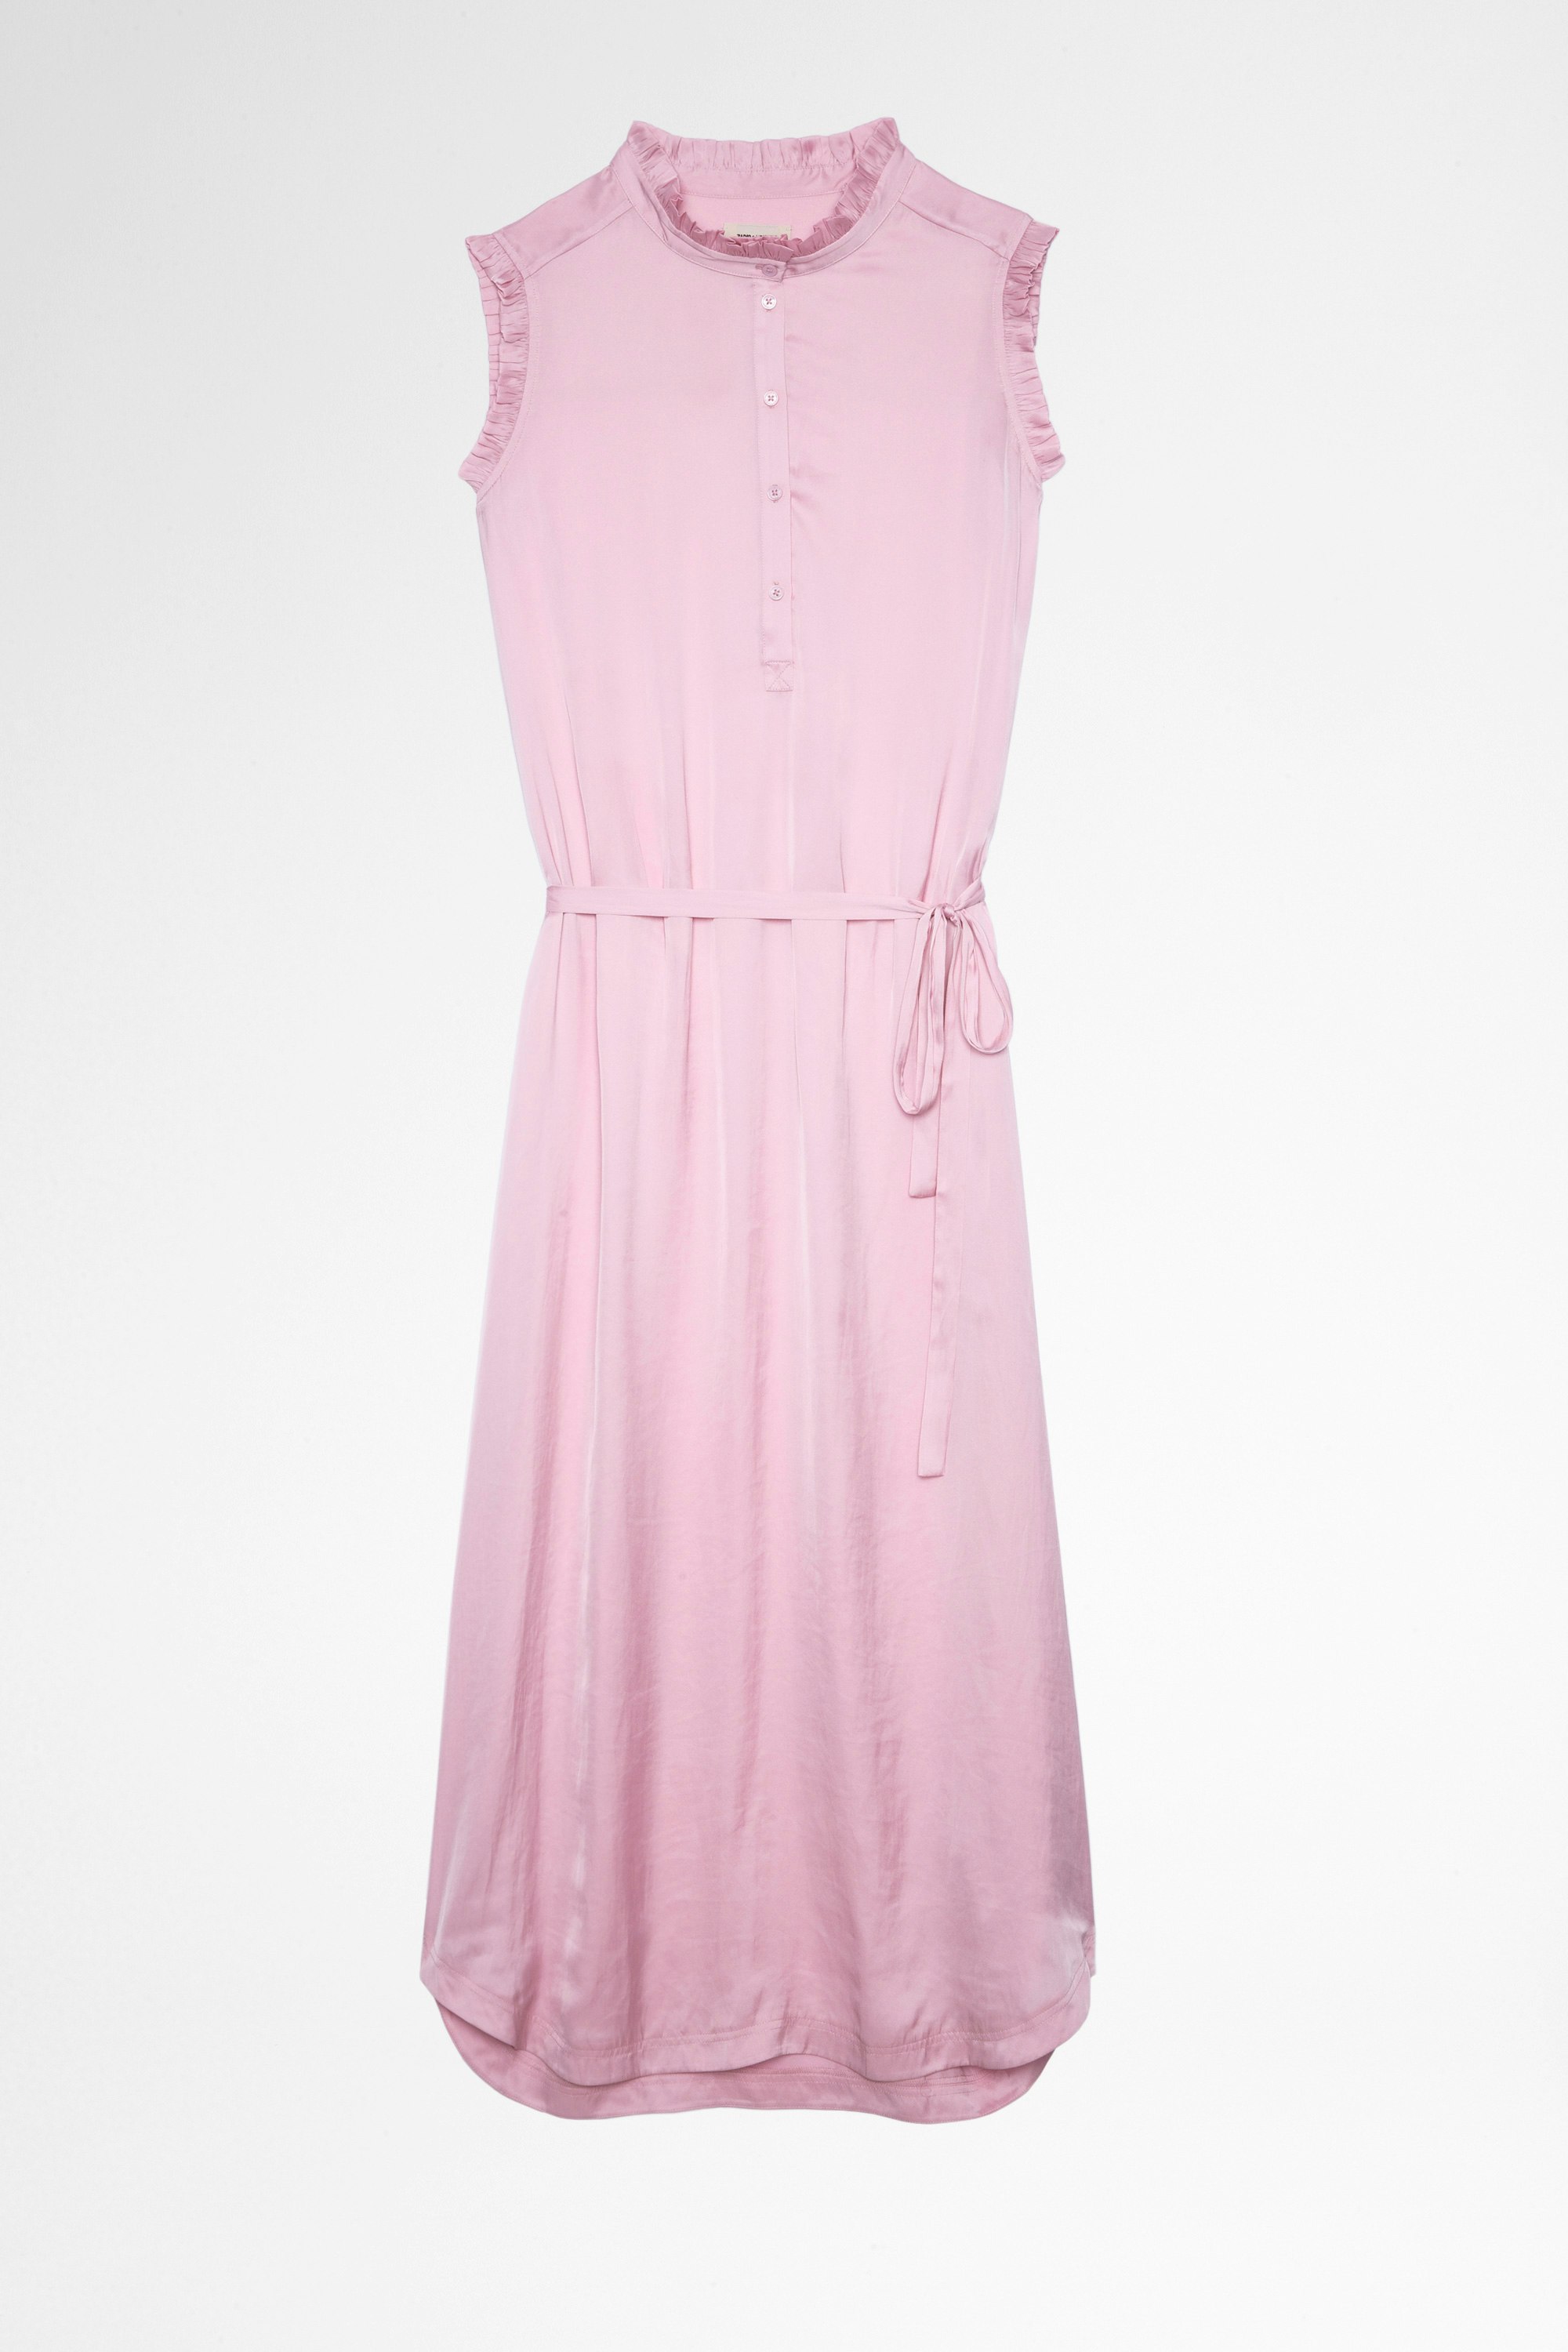 Raos ワンピース Women's pink satin dress 